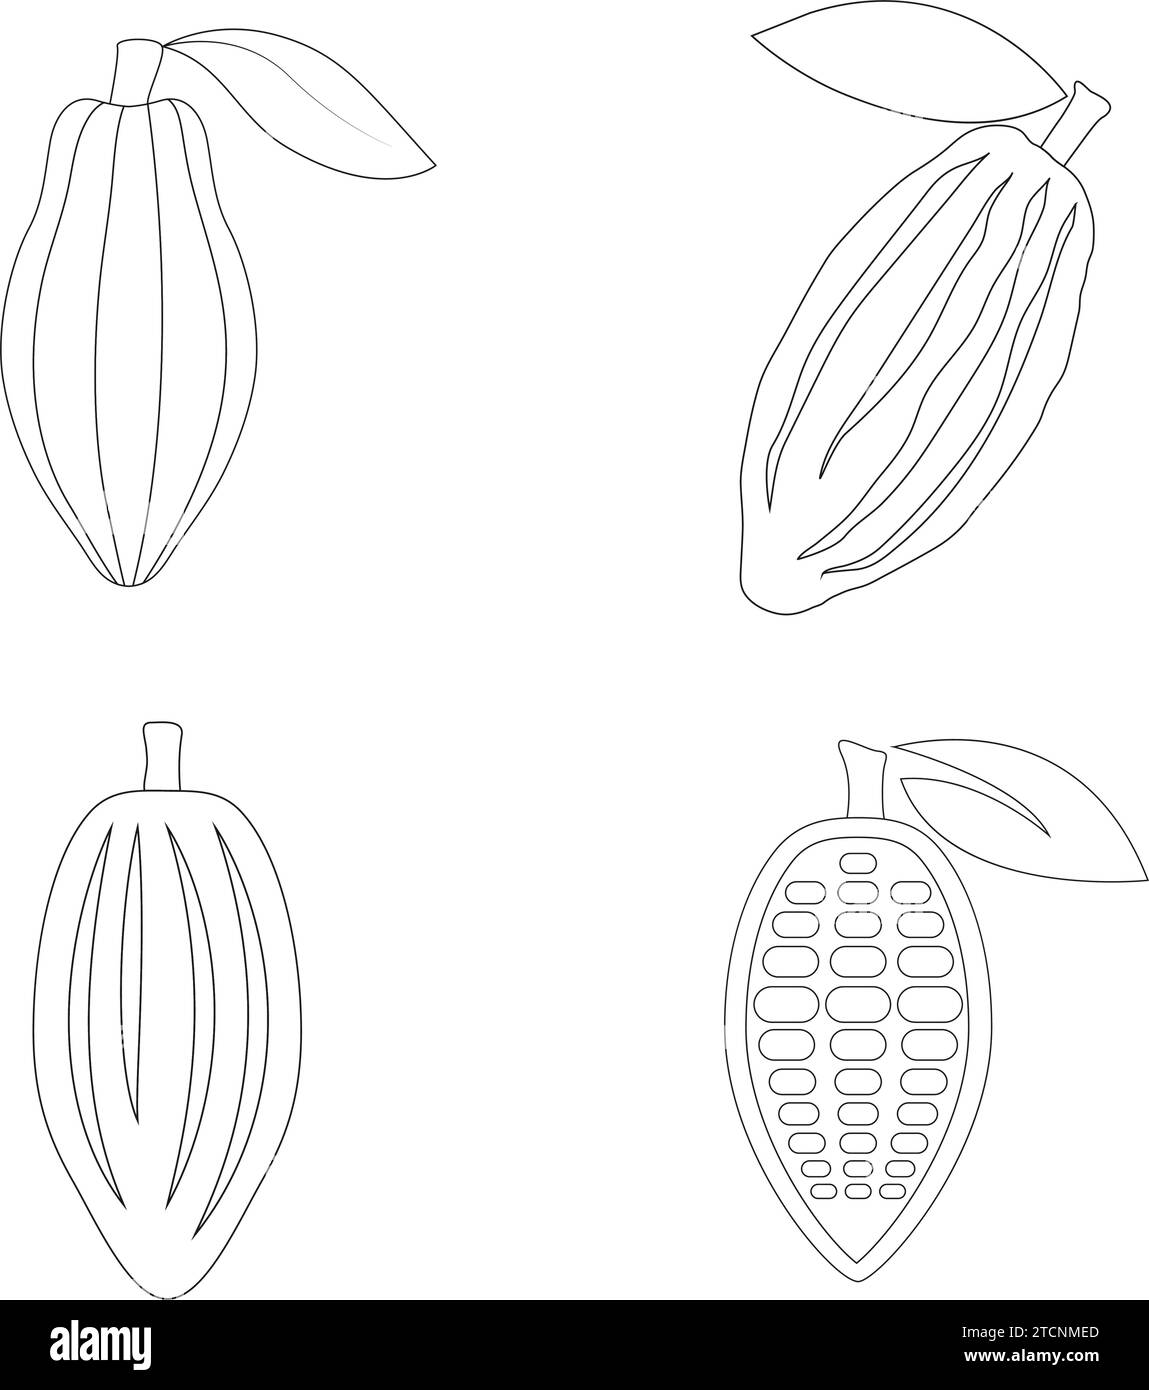 cacao icon vector illustration design Stock Vector